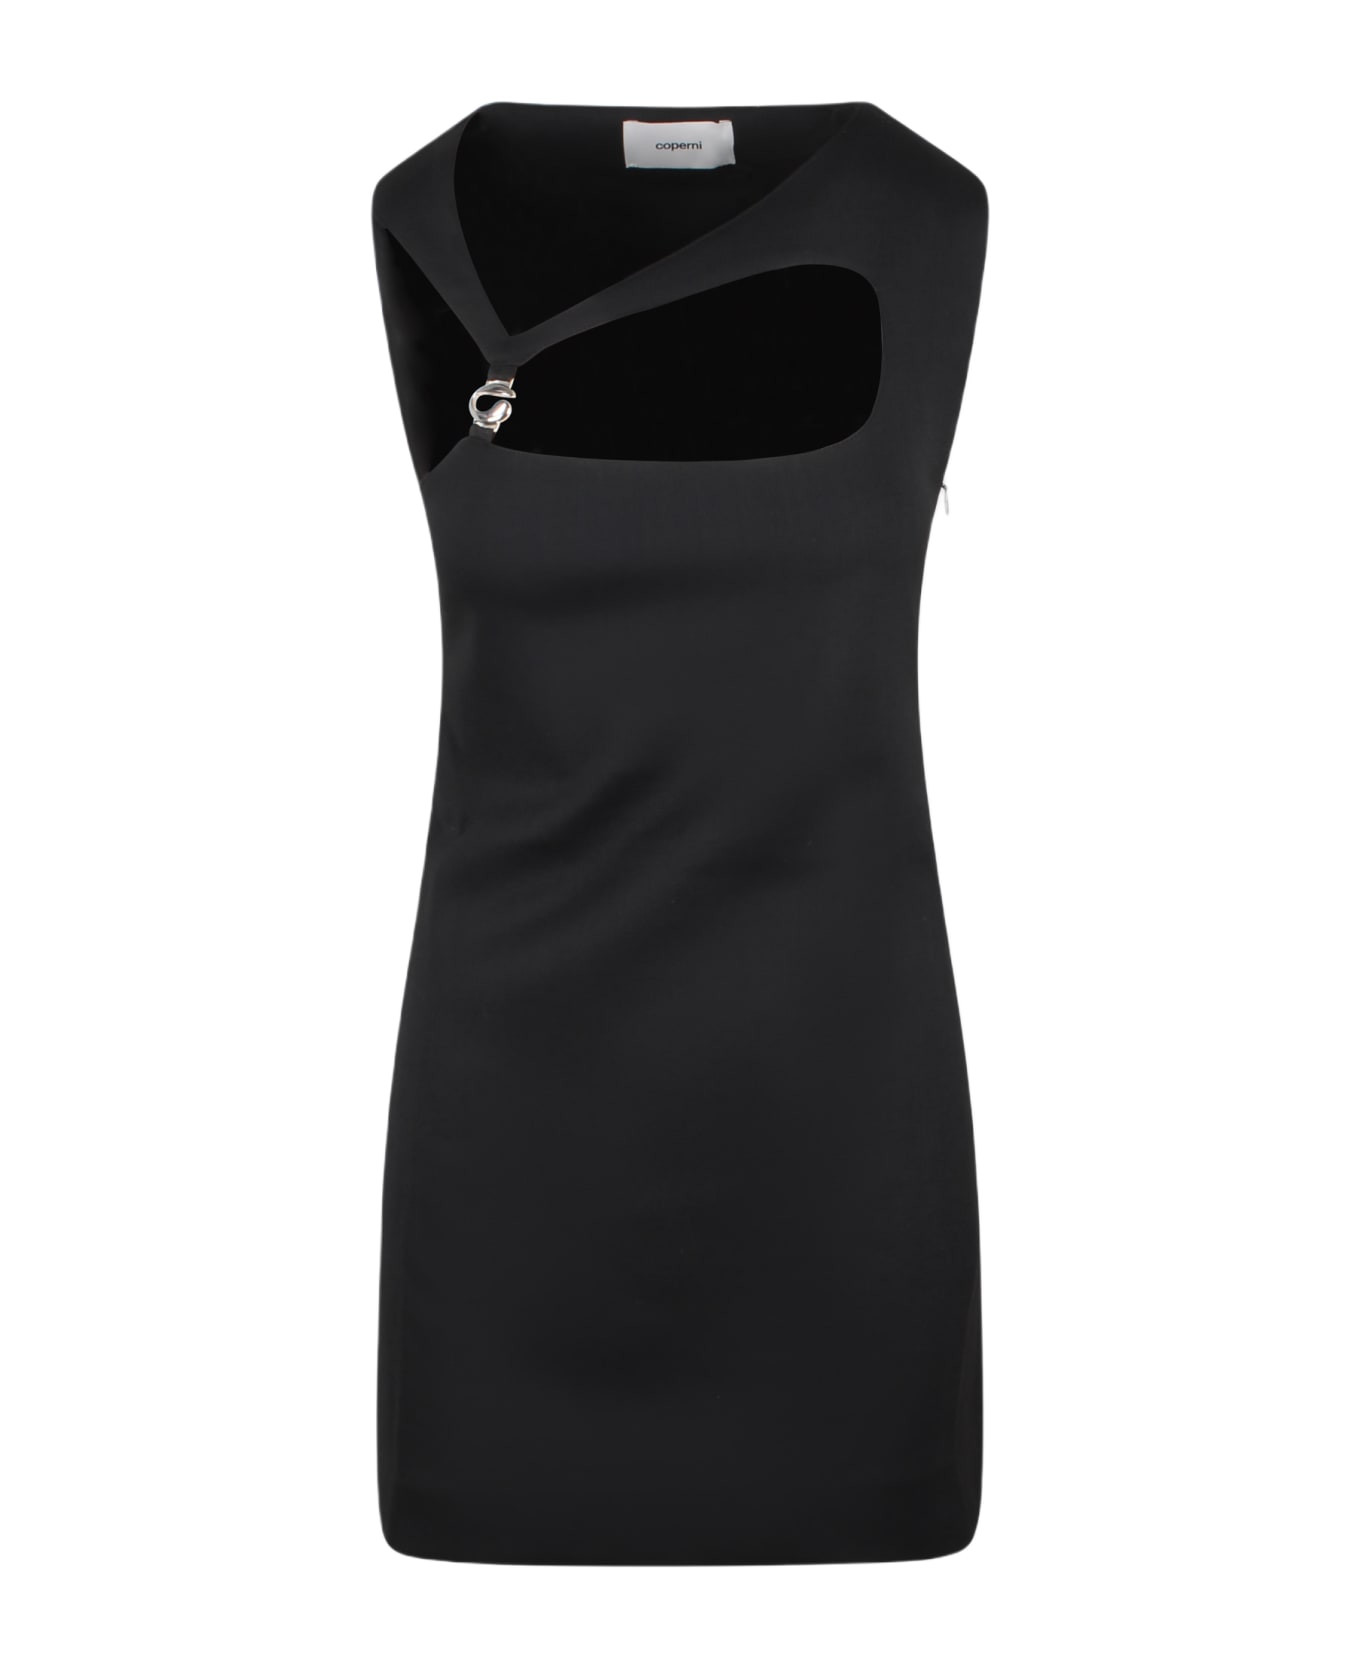 Coperni Cut Out Mini Dress - Black タンクトップ